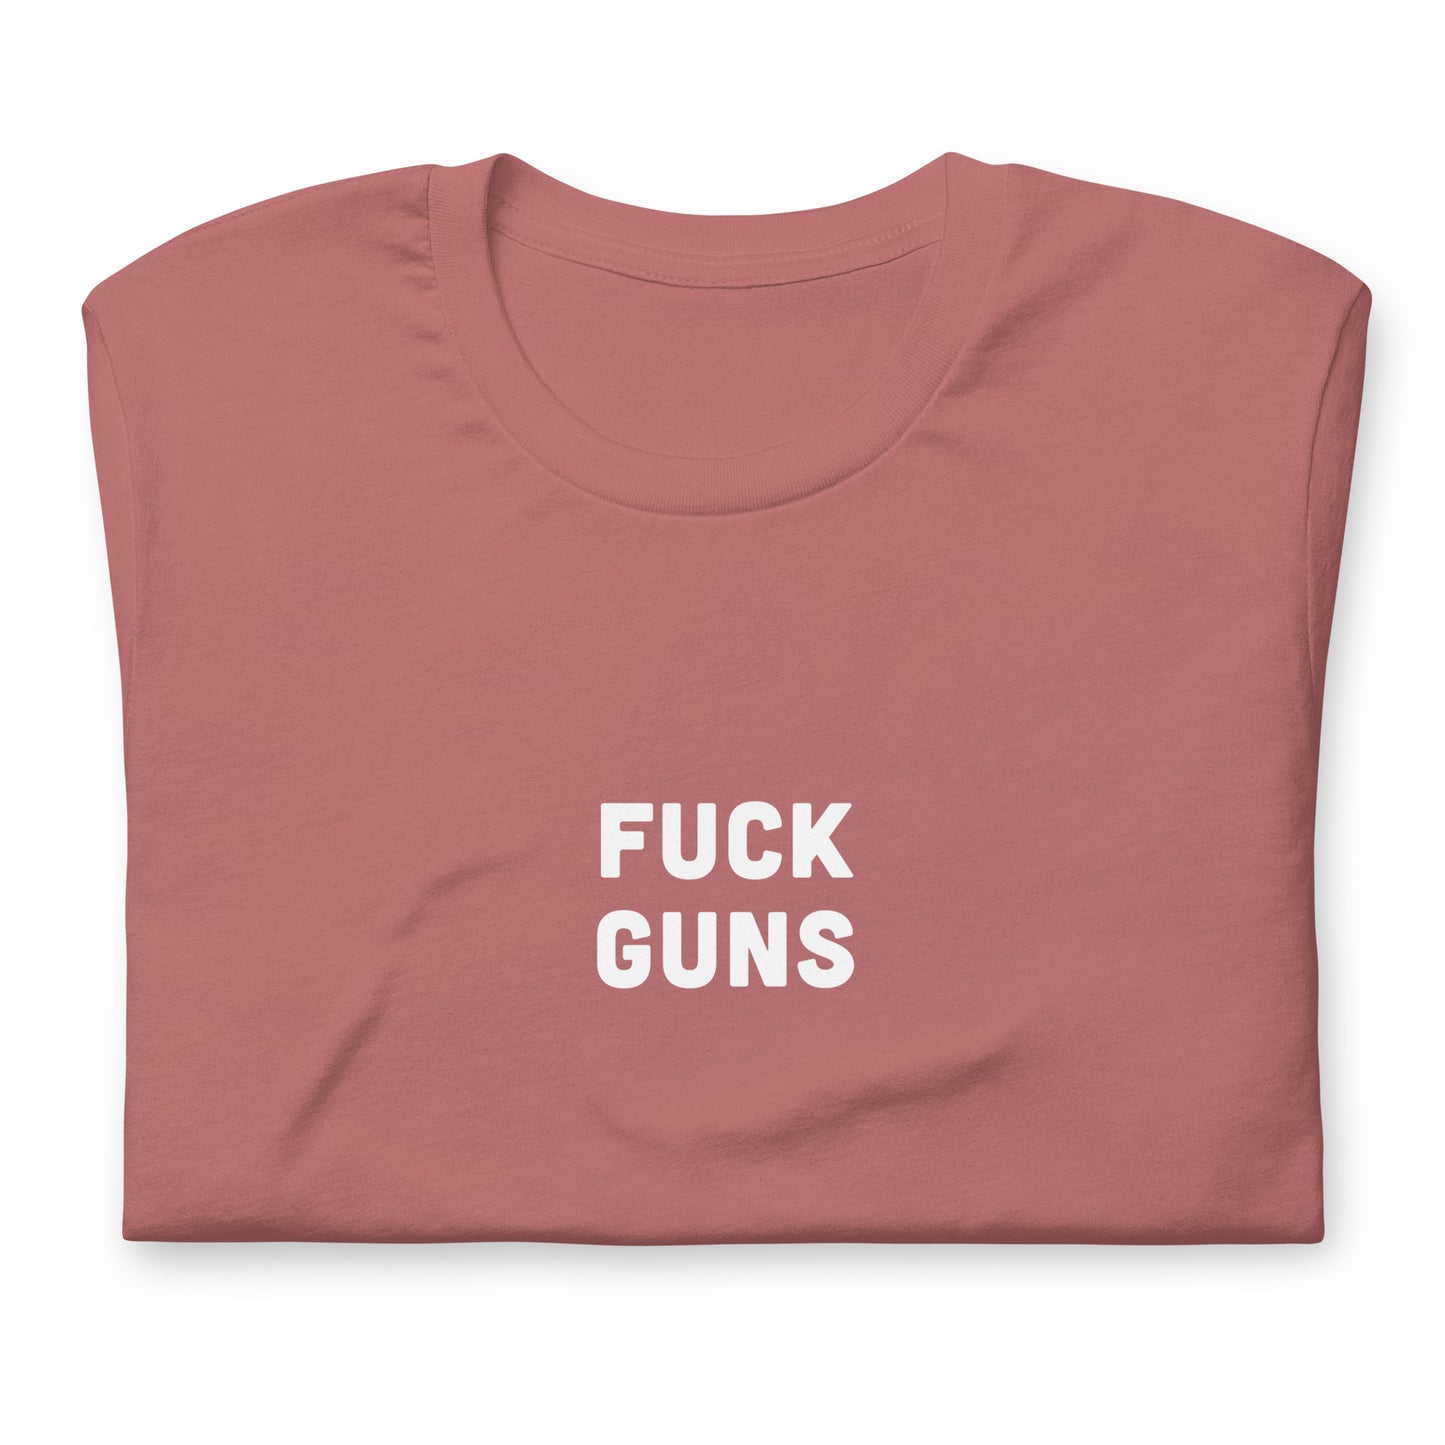 Fuck Guns T-Shirt Size XL Color Navy